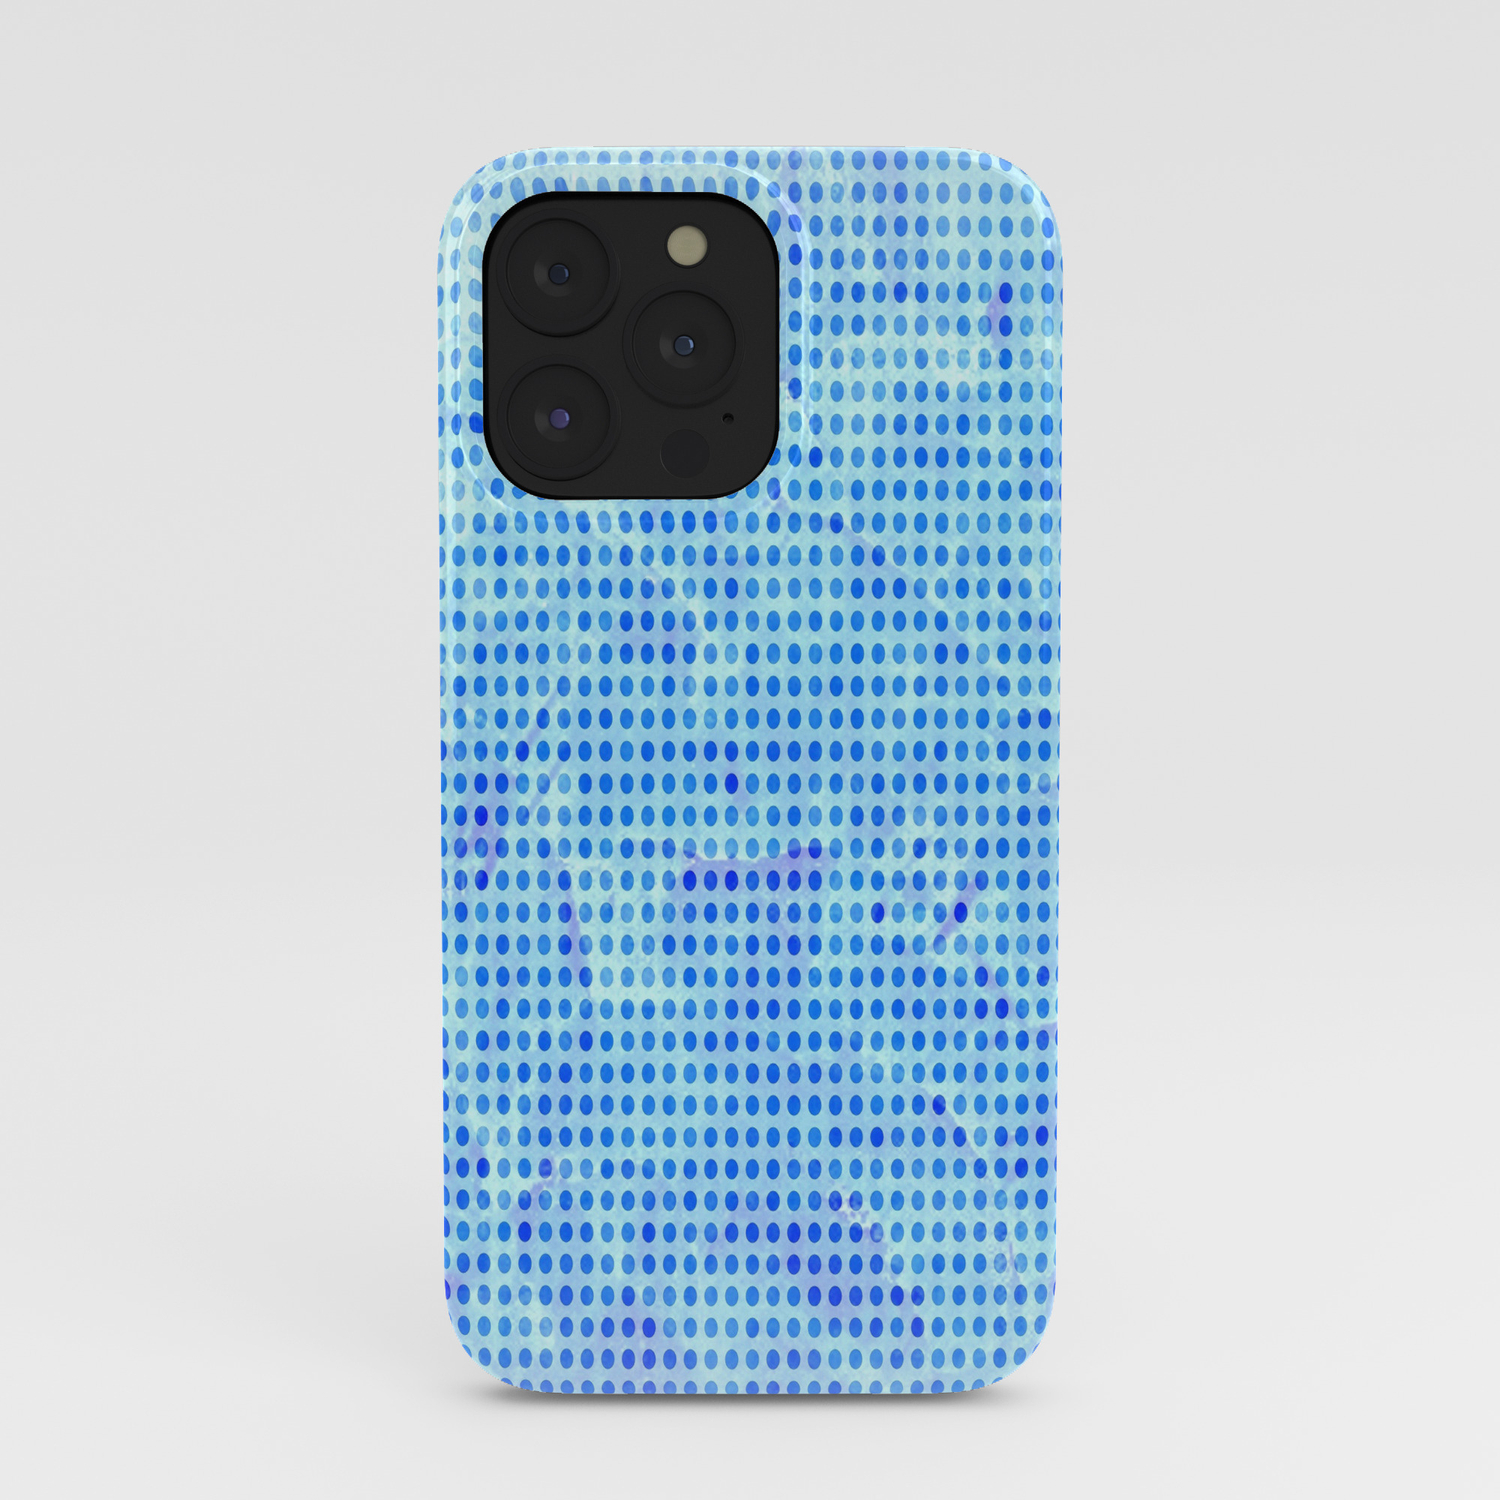 sagde ugentlig barm Pale Blue Dots Pattern iPhone Case by Corbin Henry | Society6